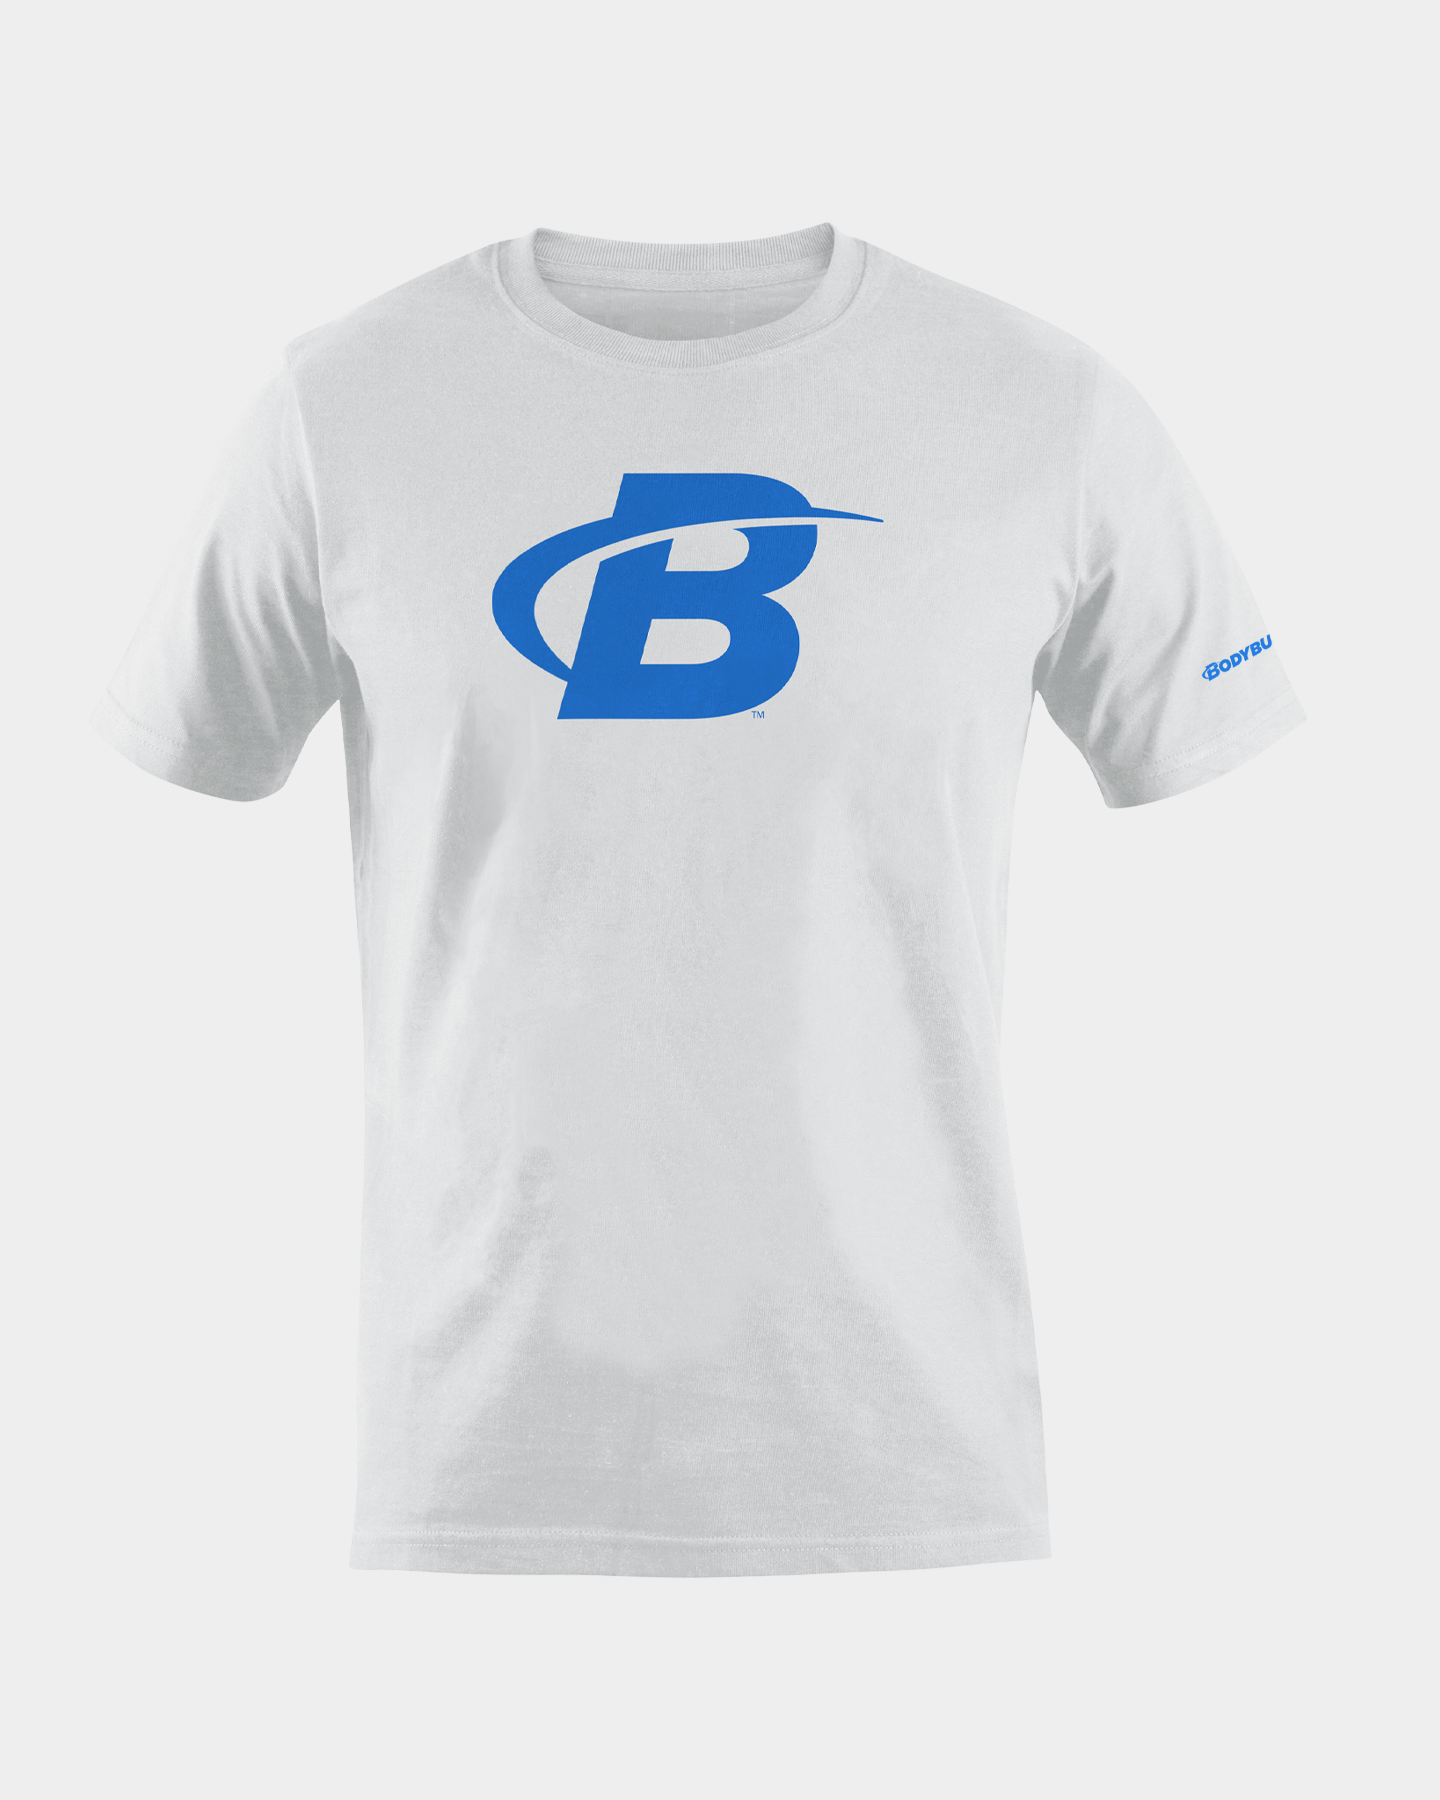 Bodybuilding.com Clothing Classic B Logo Tee, White, M A1